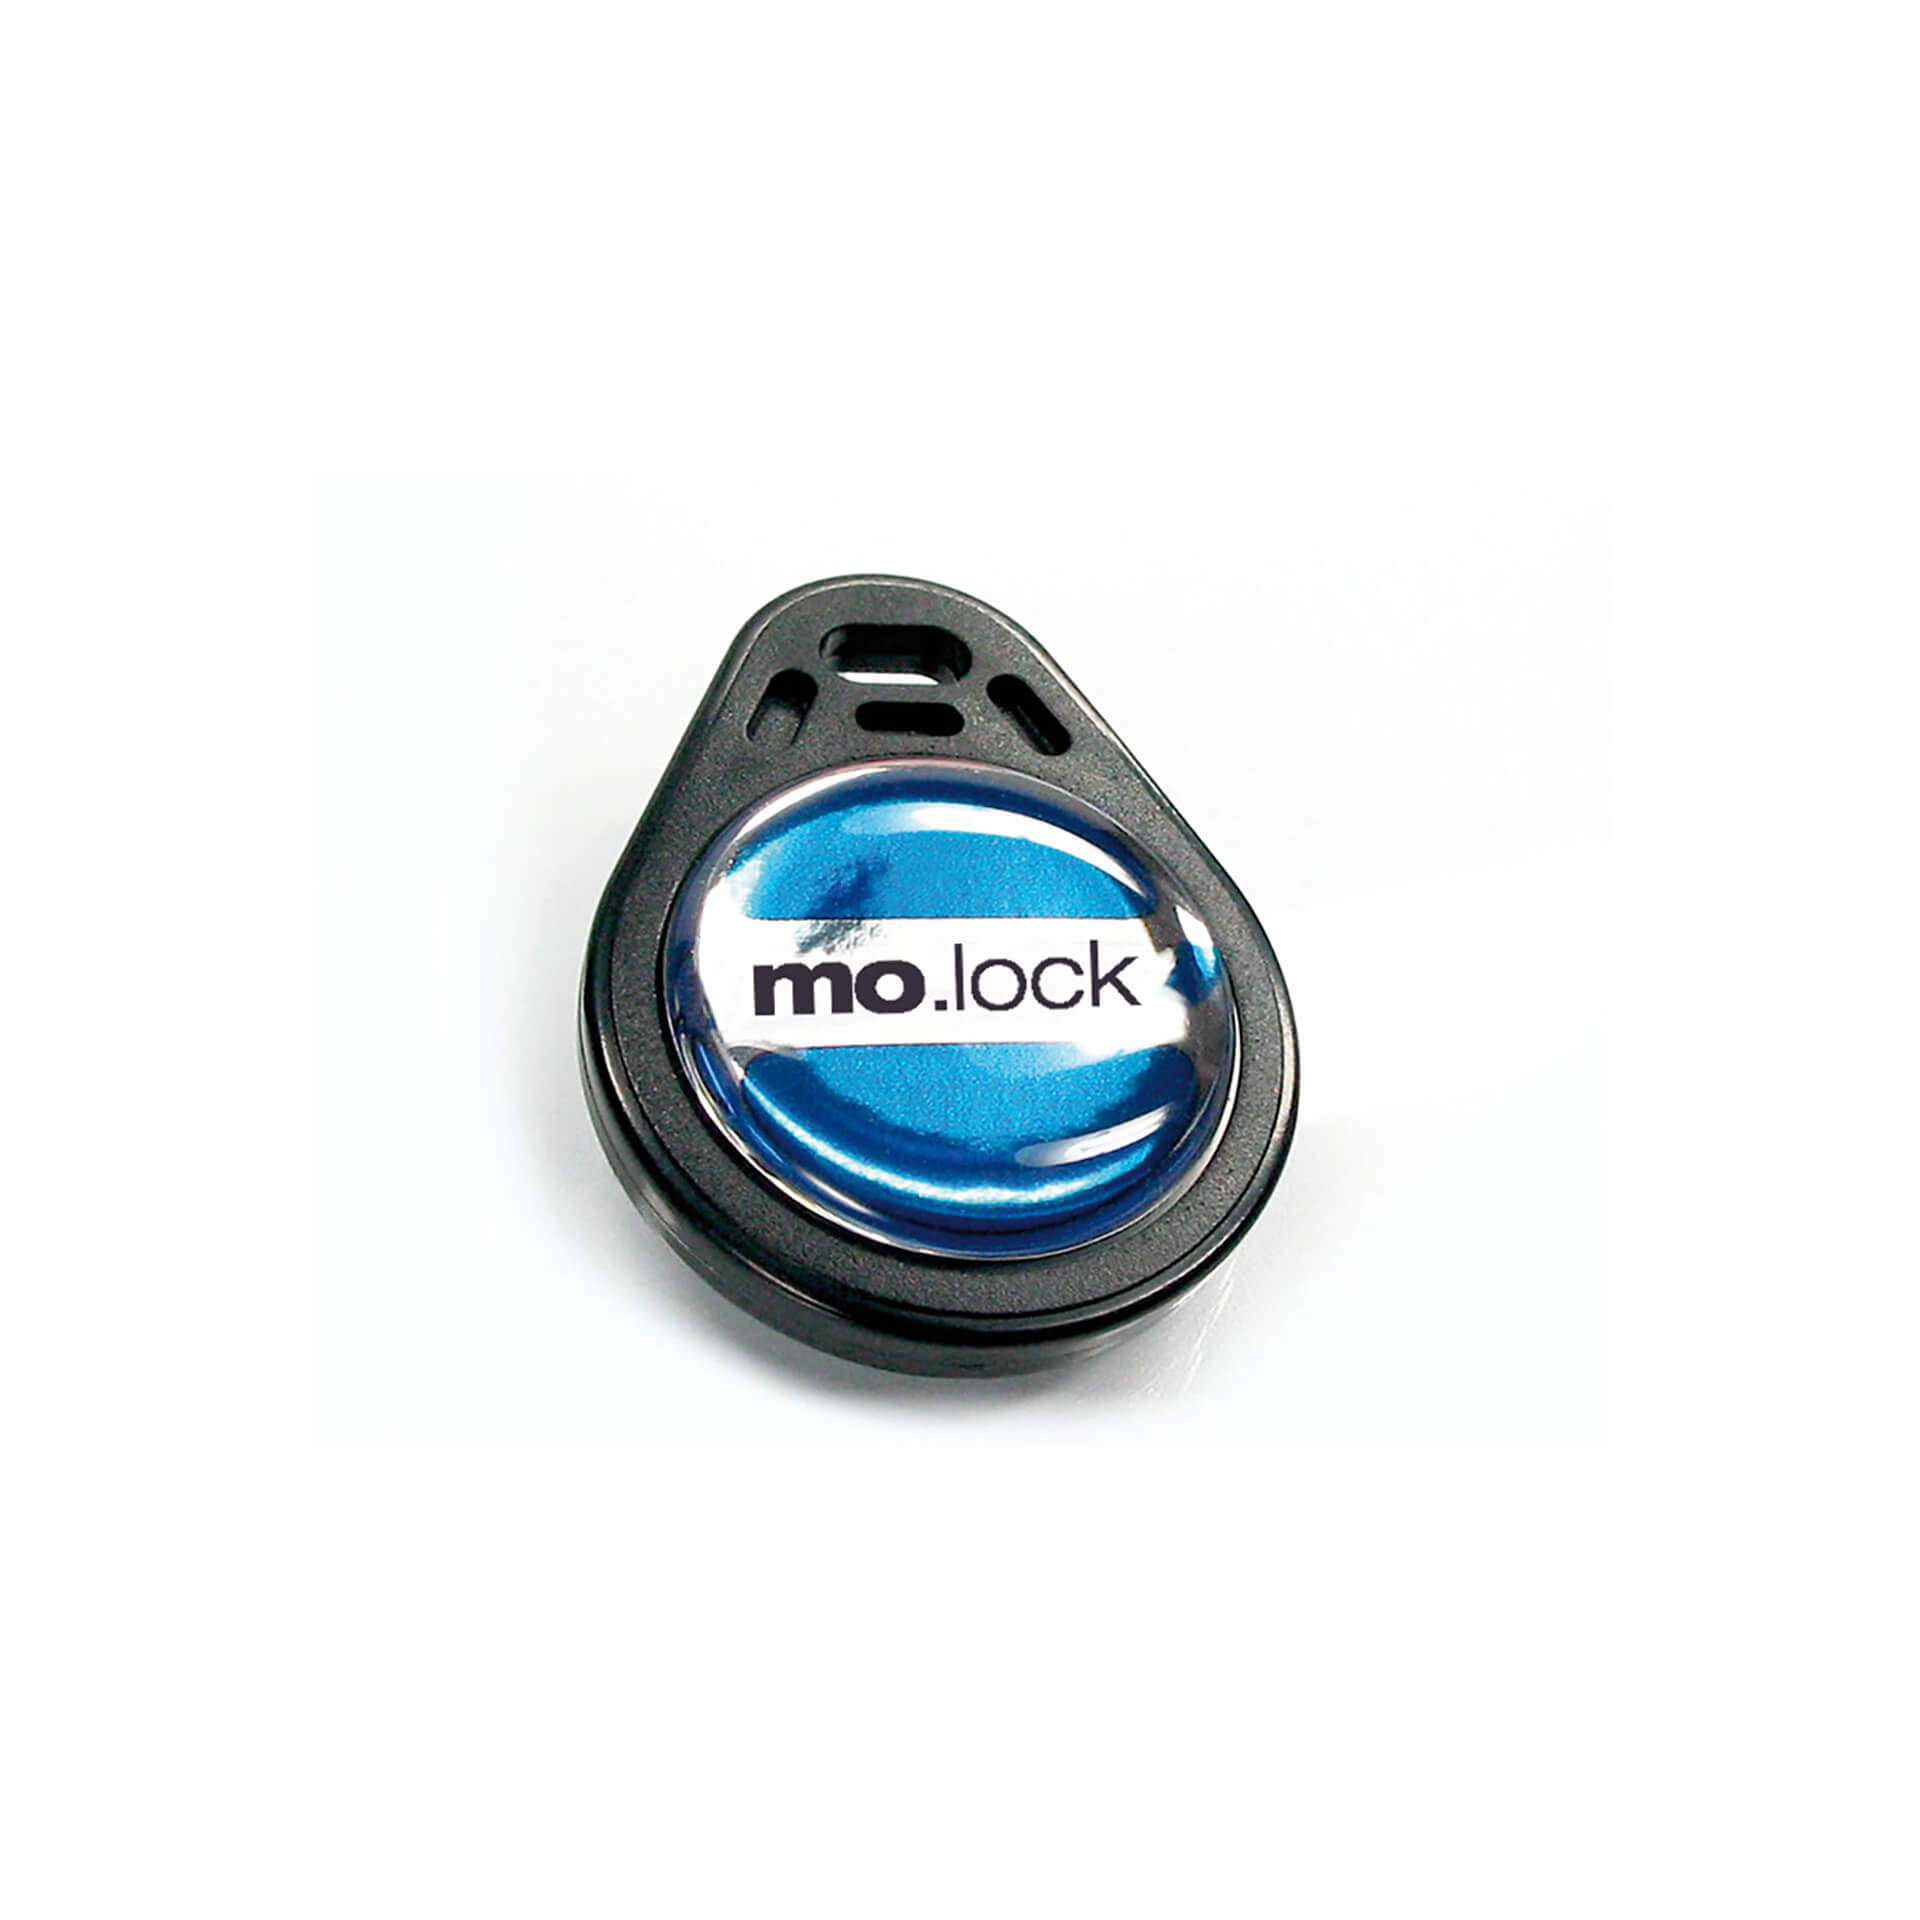 motogadget mo.lock Key Teardrop, replacement key